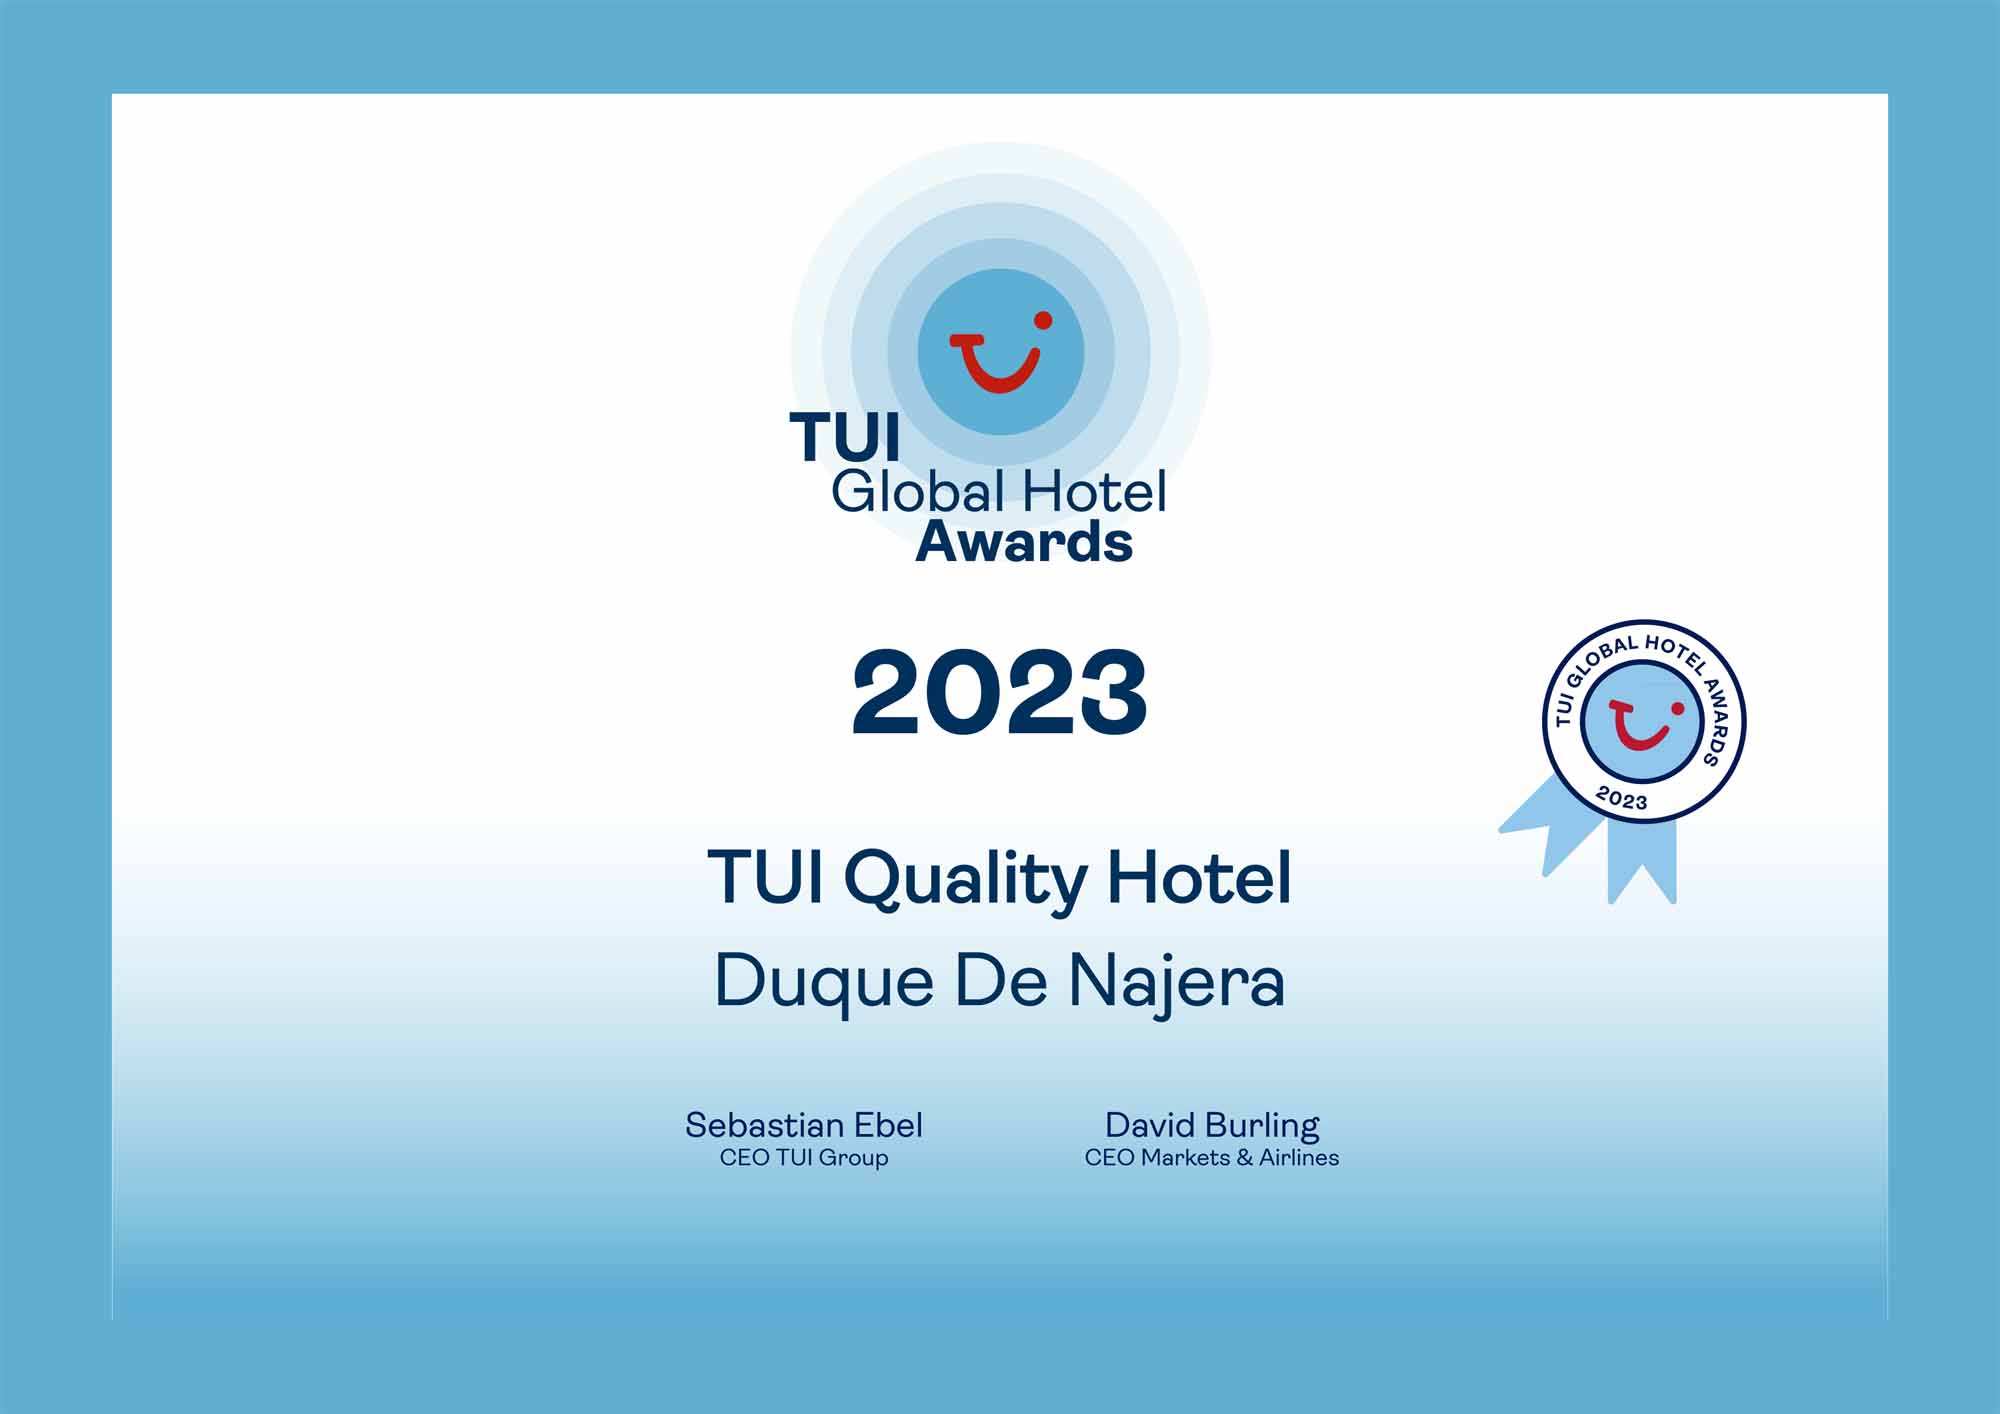 Hotel Duque de Nájera mit dem TUI Quality Award ausgezeichnet - HACE